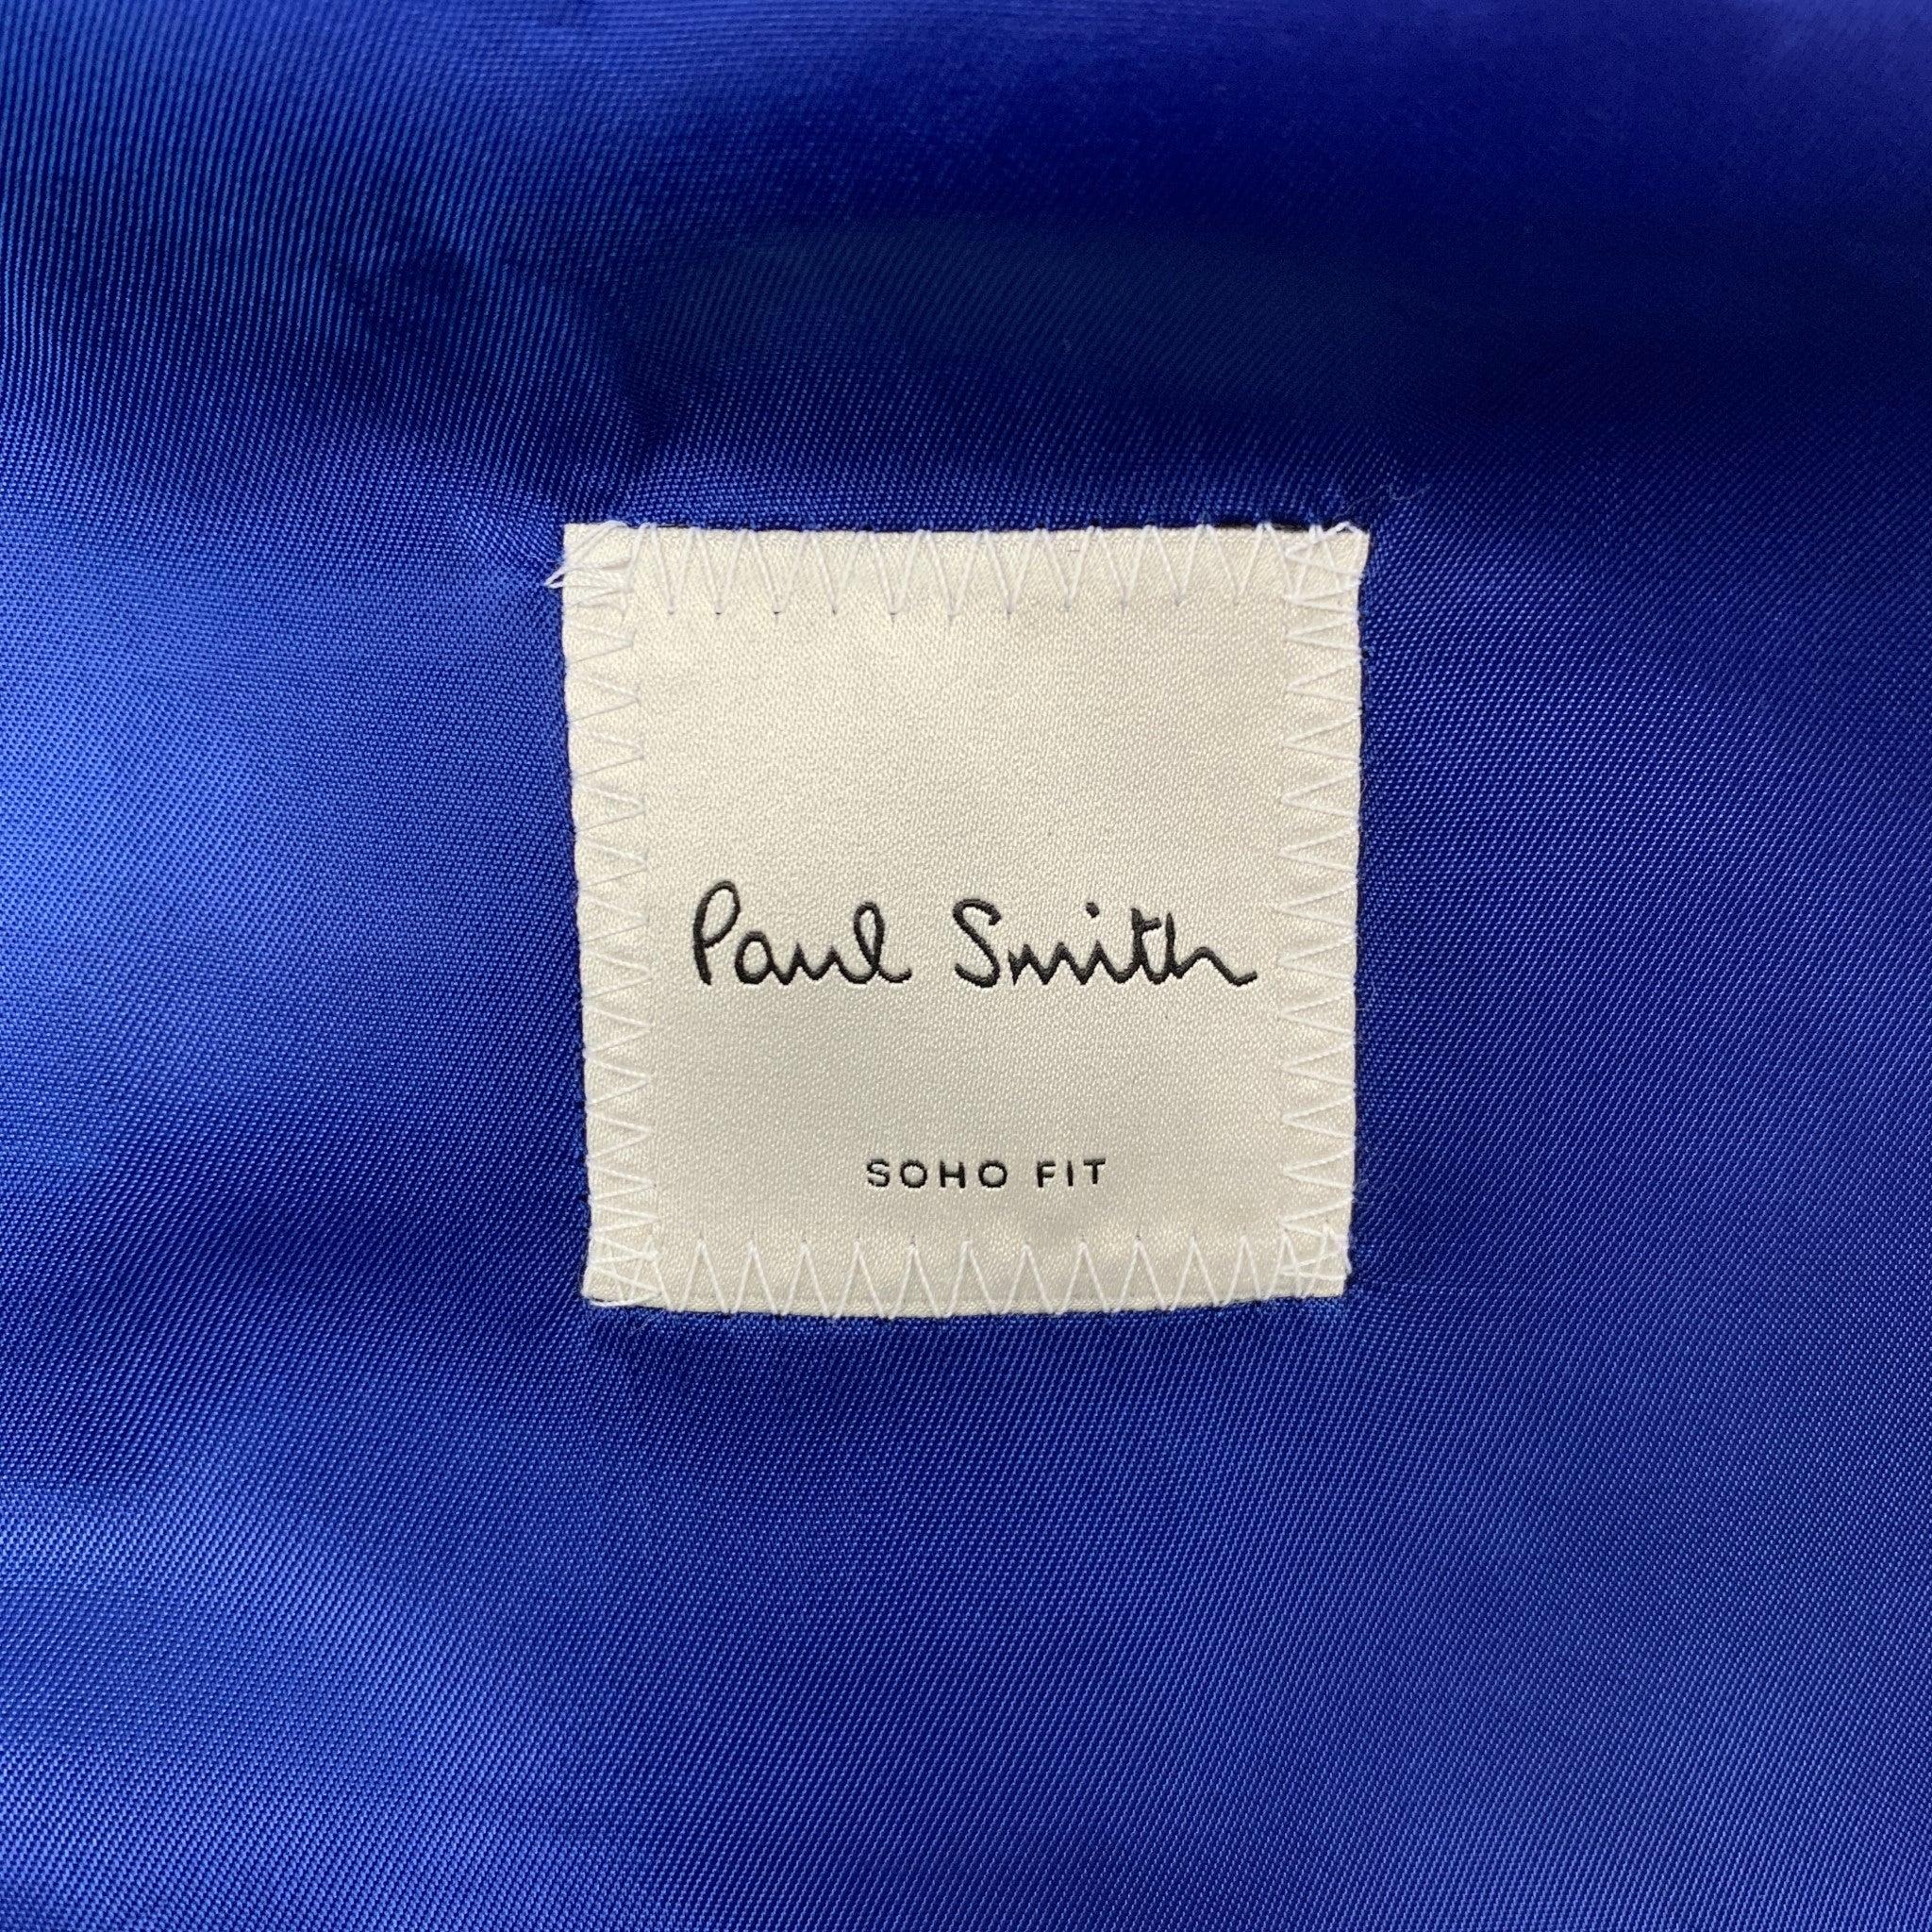 PAUL SMITH Soho Fit Size 46 Teal Wool / Mohair Peak Lapel Sport Coat For Sale 3